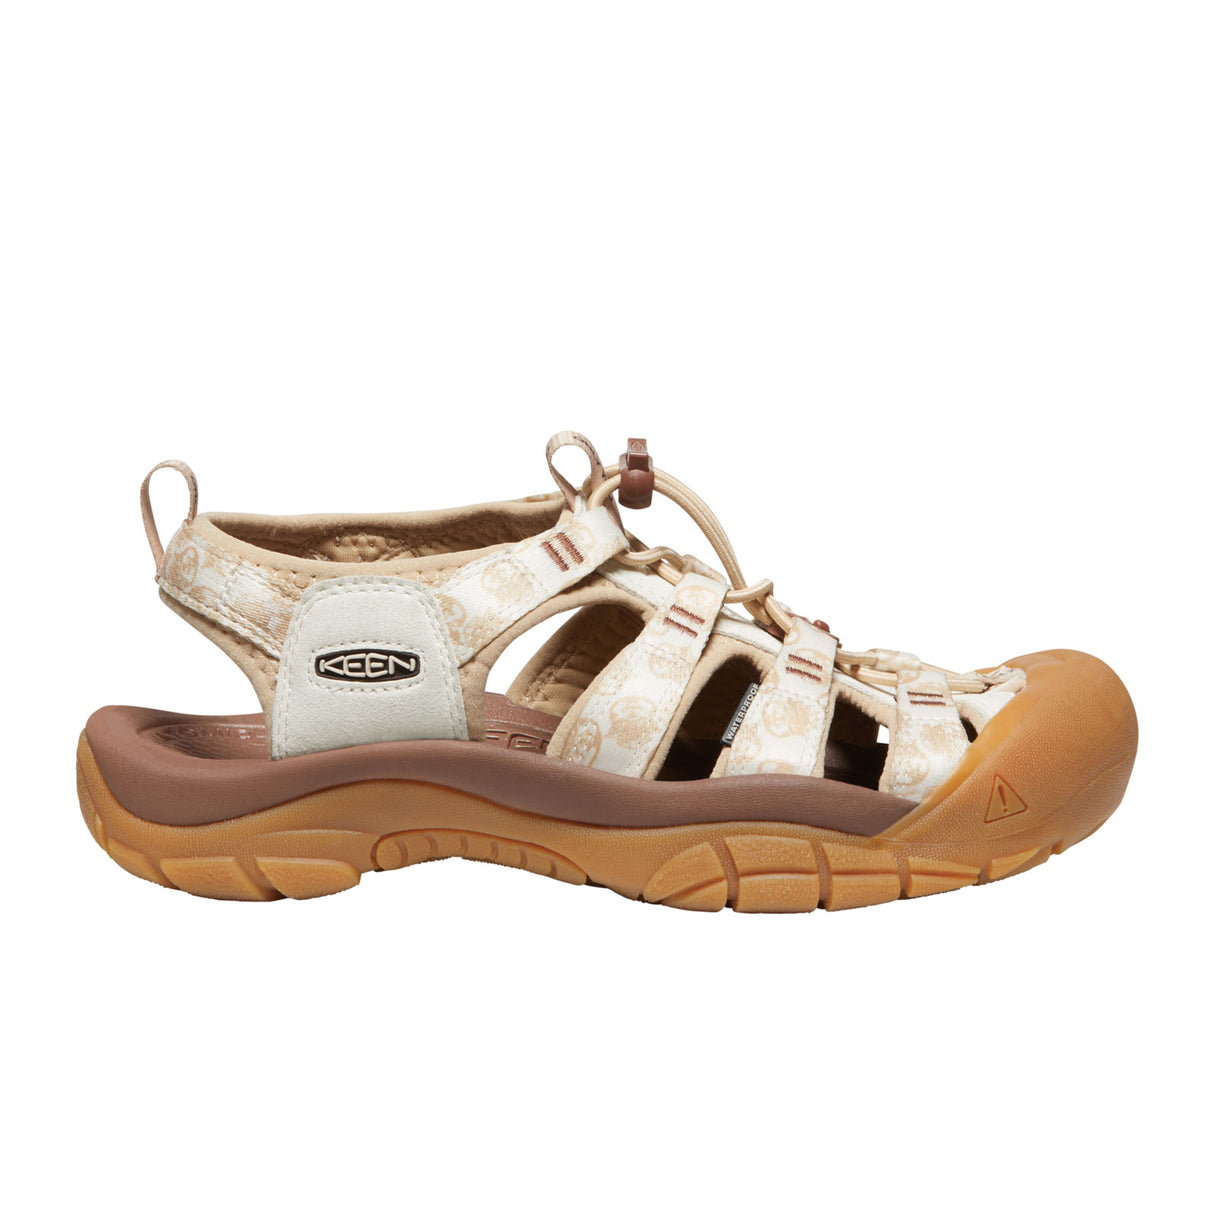 Keen Newport Retro Sandal (Women) - Smokey Bear/Smores Sandals - Active - The Heel Shoe Fitters